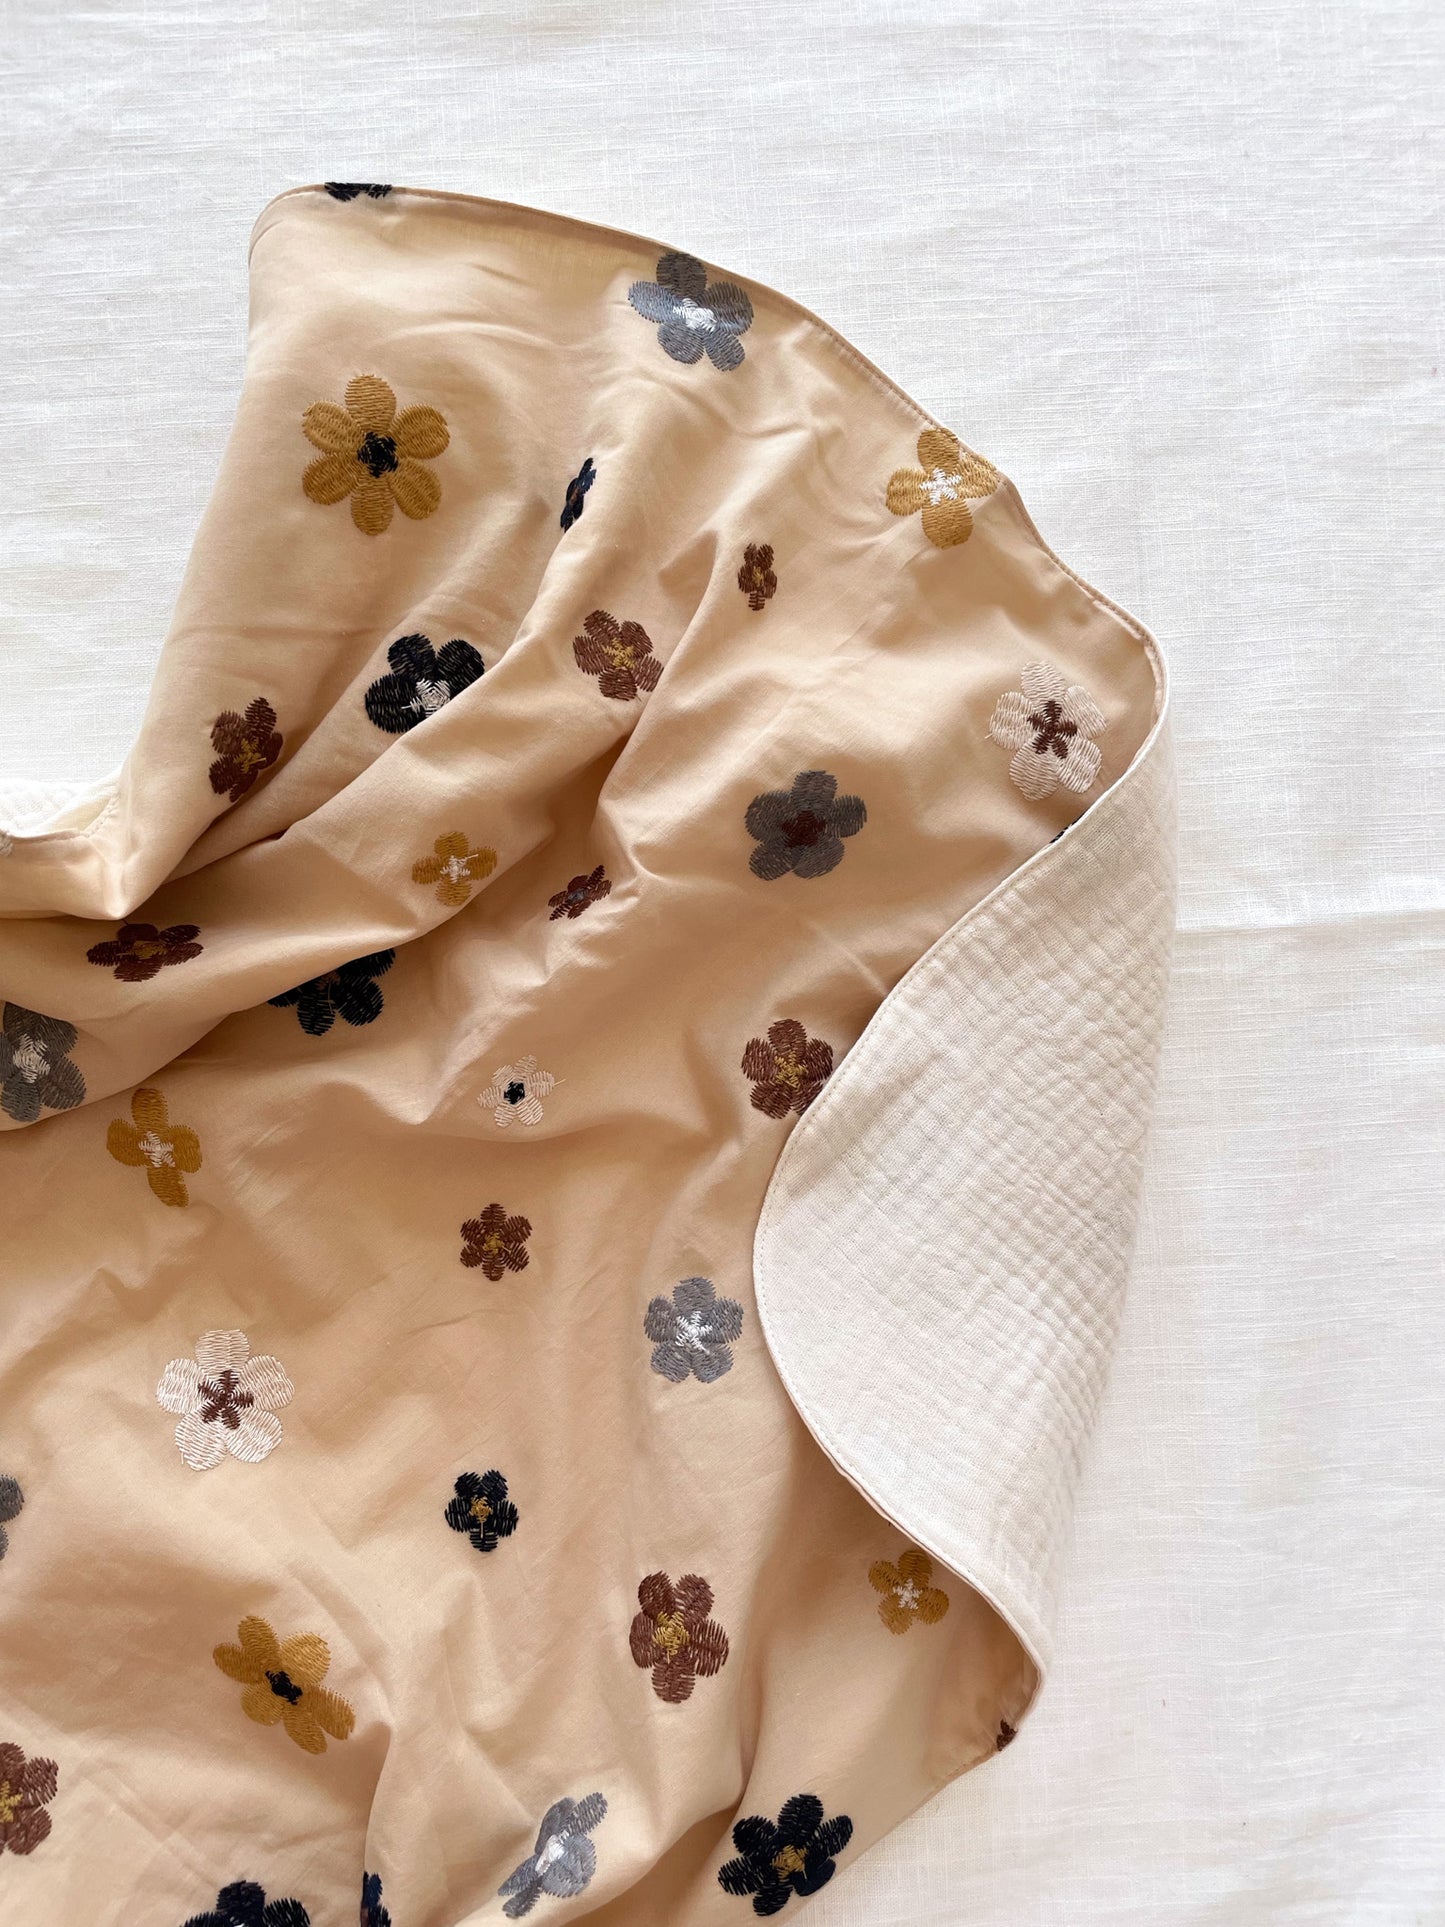 Baby blanket / embroidered boho flowers - beige